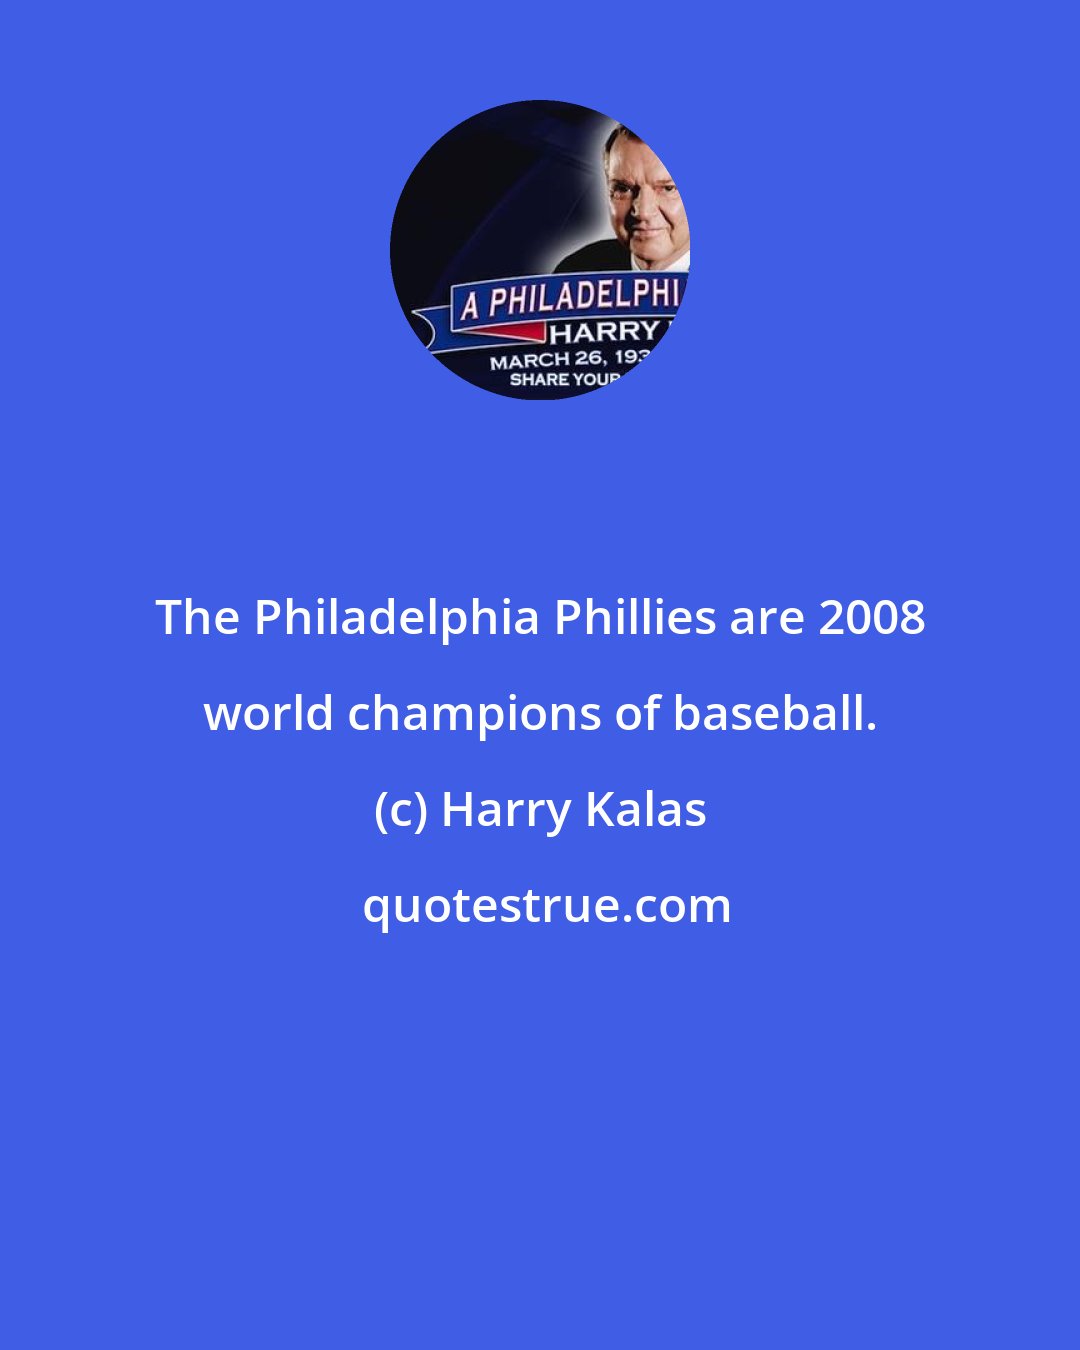 Harry Kalas: The Philadelphia Phillies are 2008 world champions of baseball.